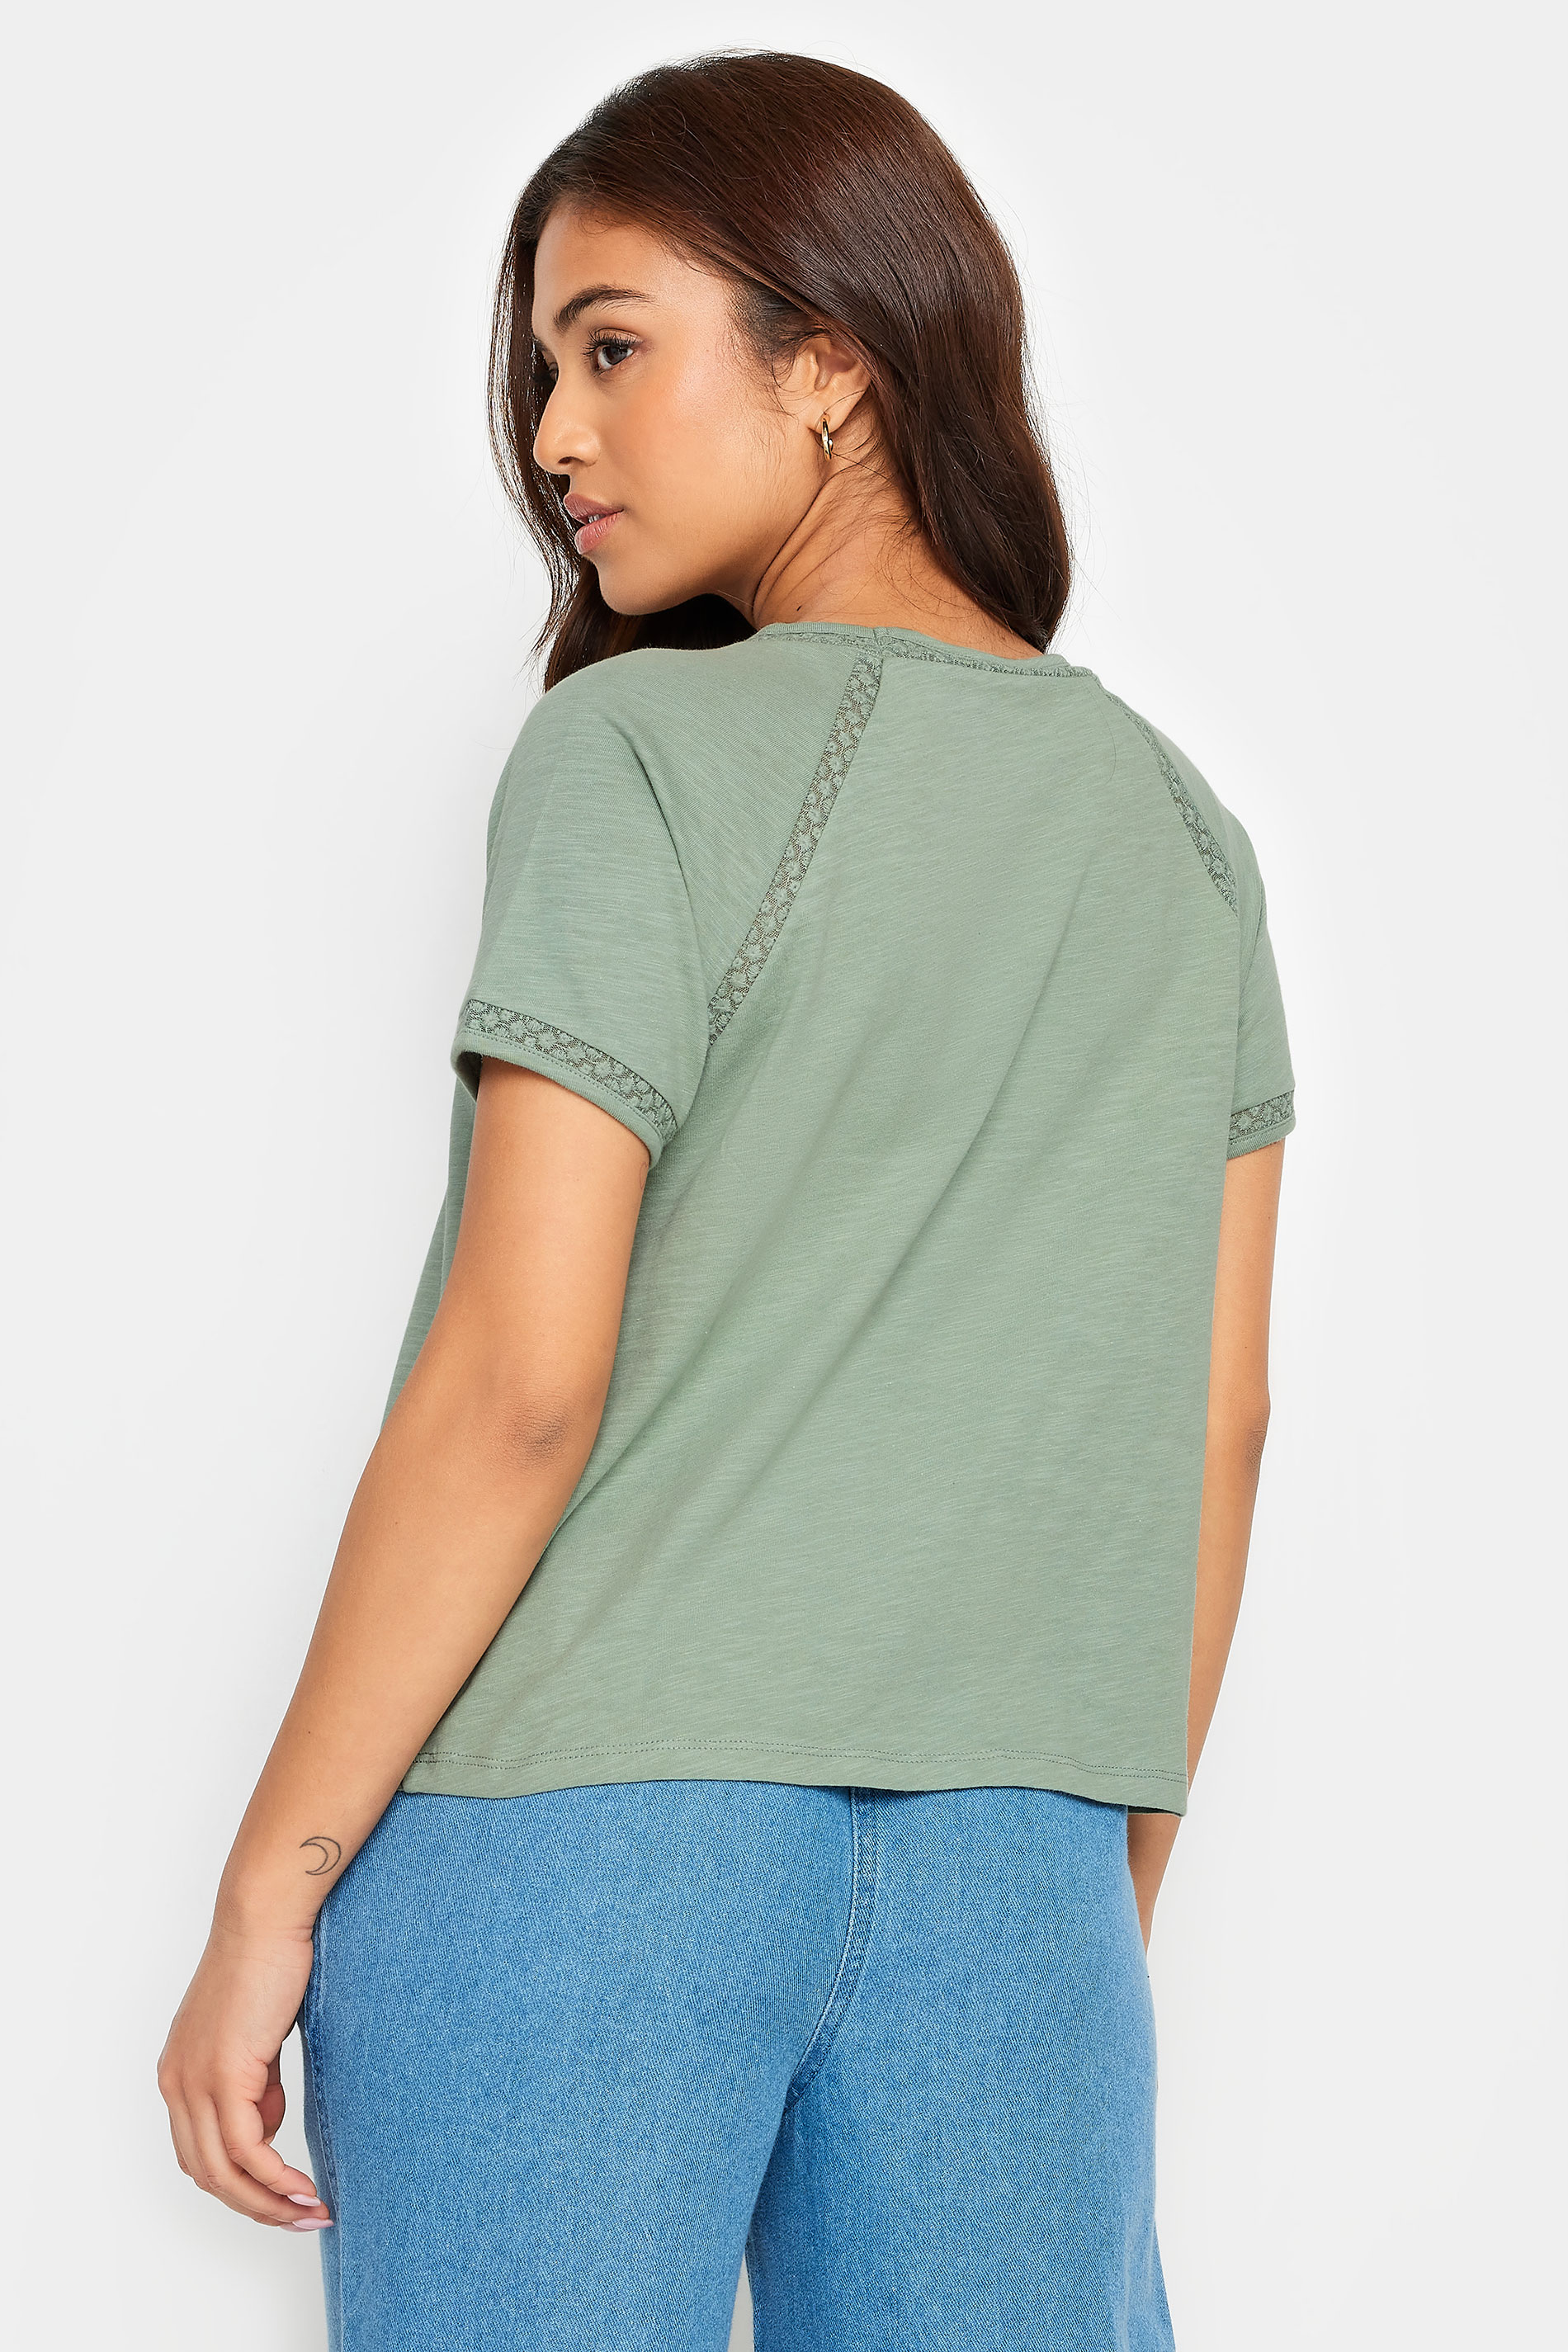 PixieGirl Petite Women's Sage Green Crochet Detail T-Shirt | PixieGirl 3